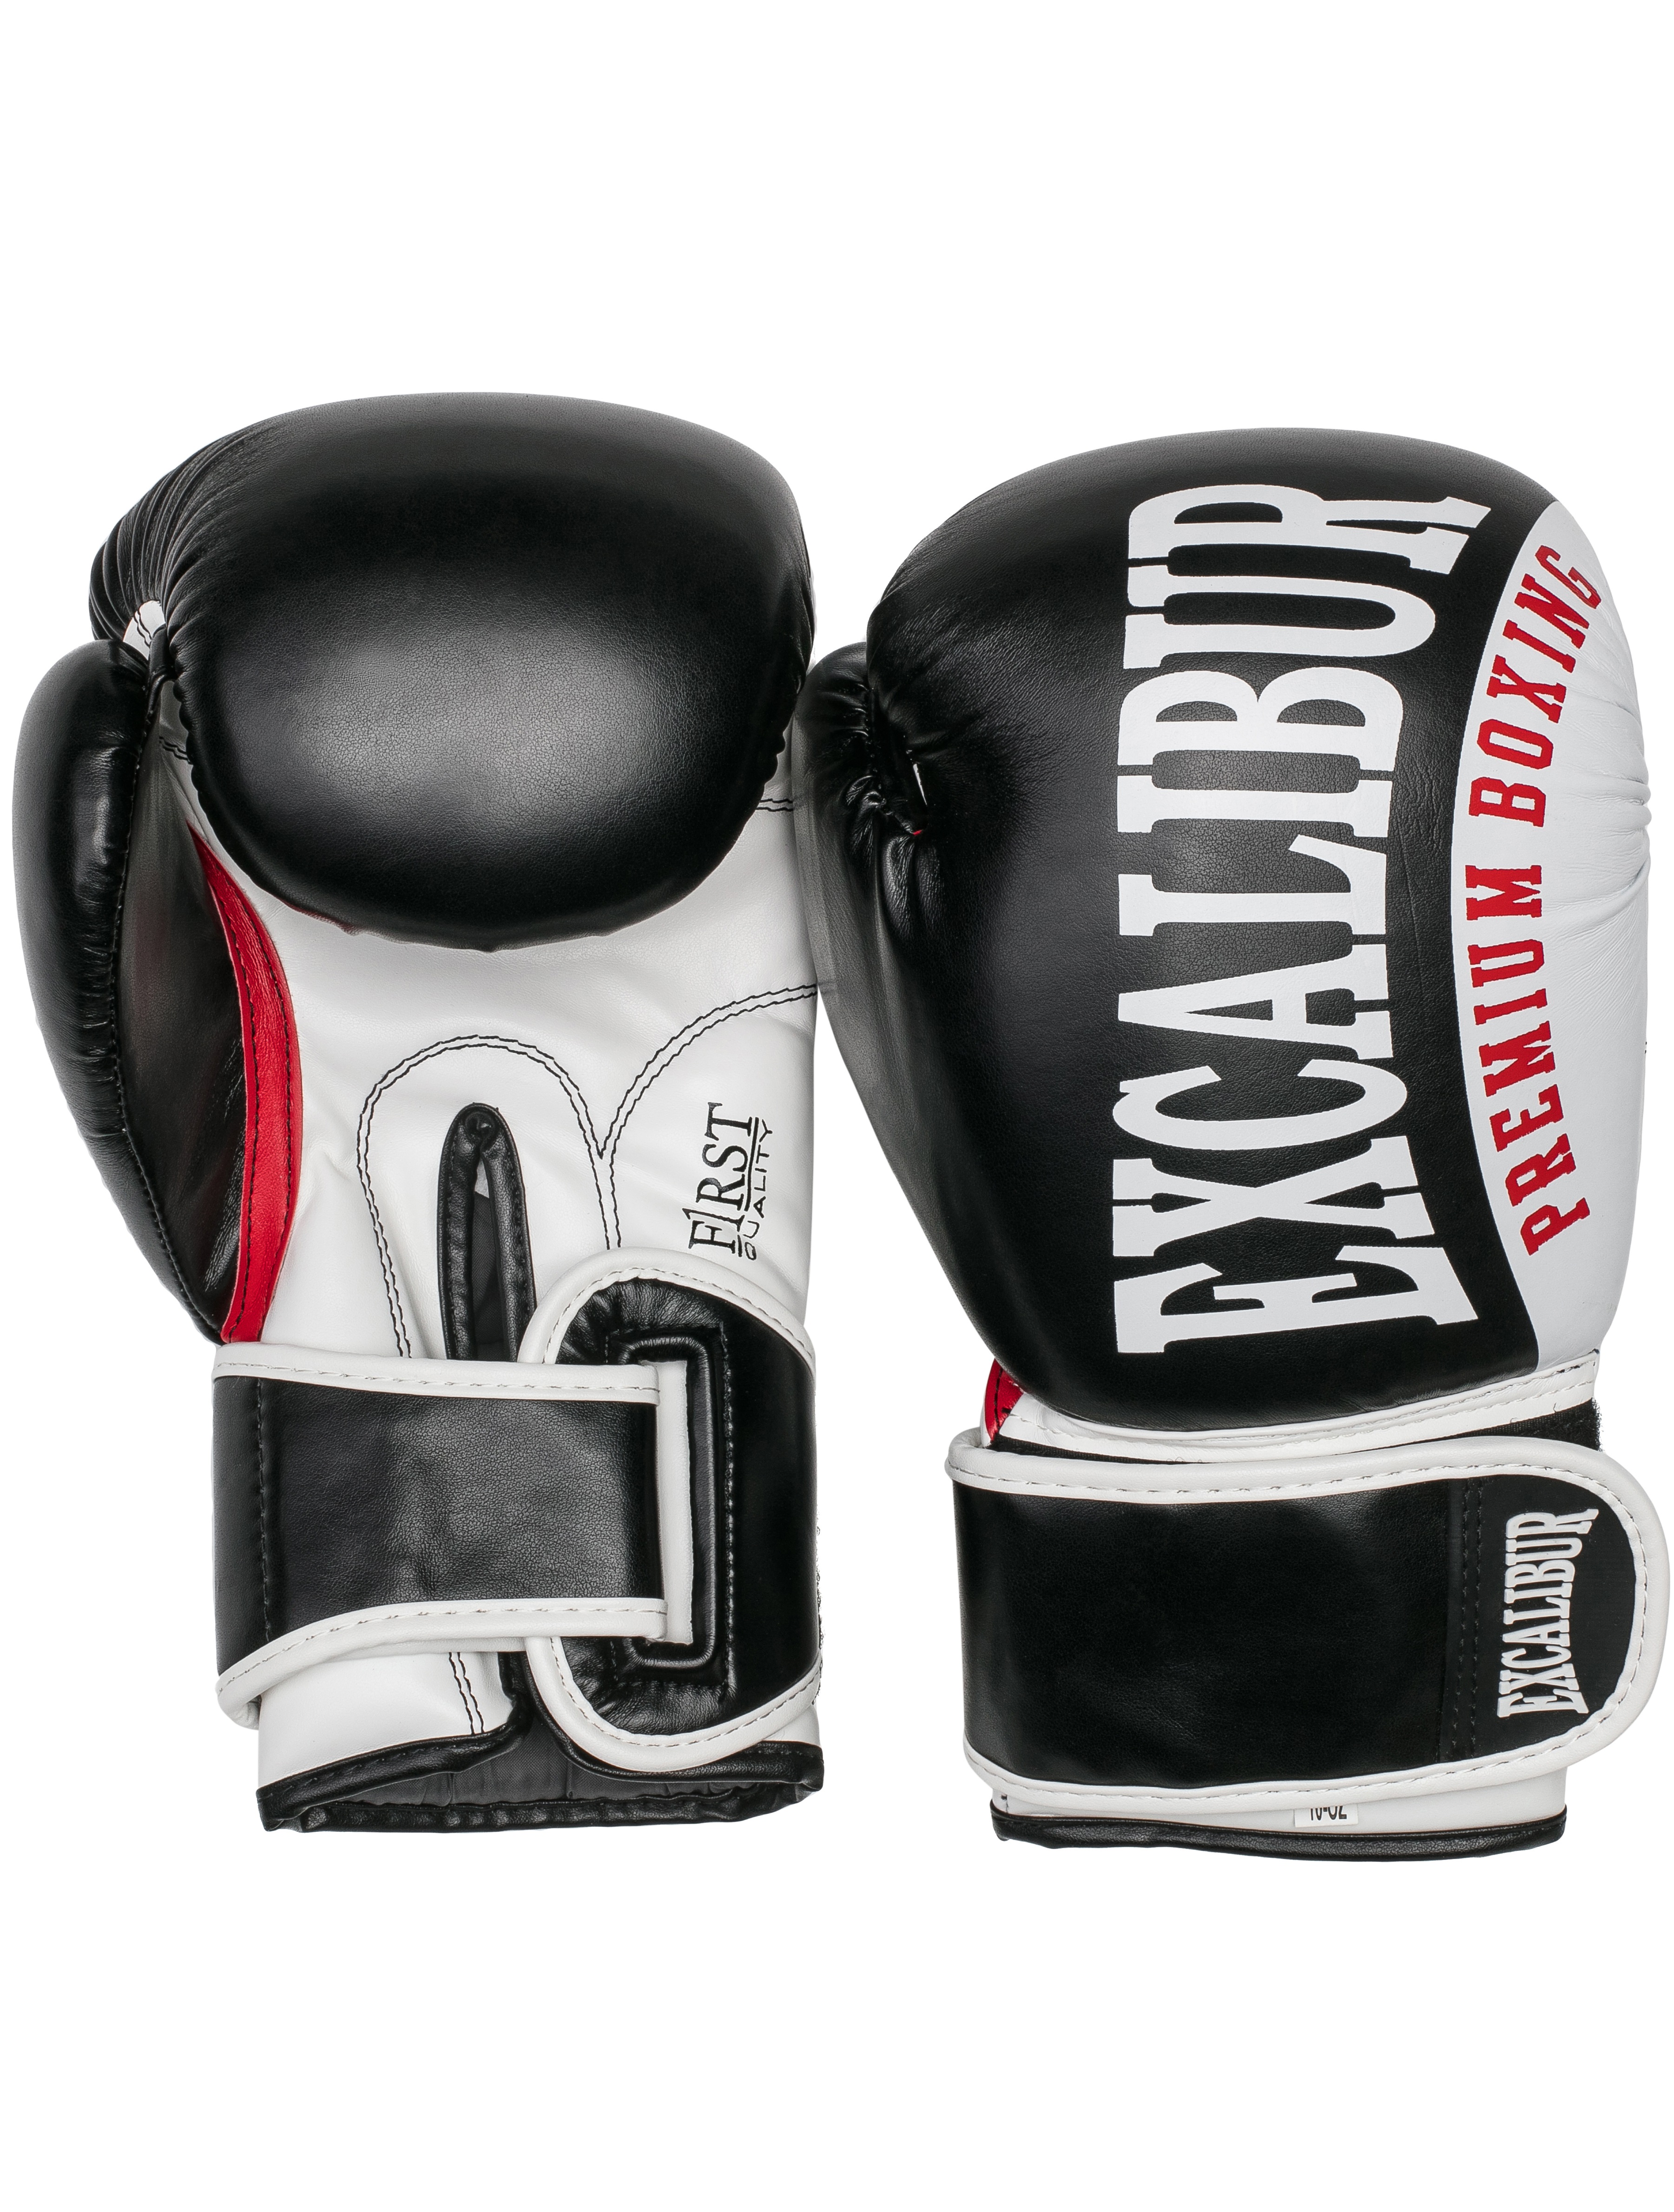 Перчатки боксерские Excalibur 8019-03 Black/White PU